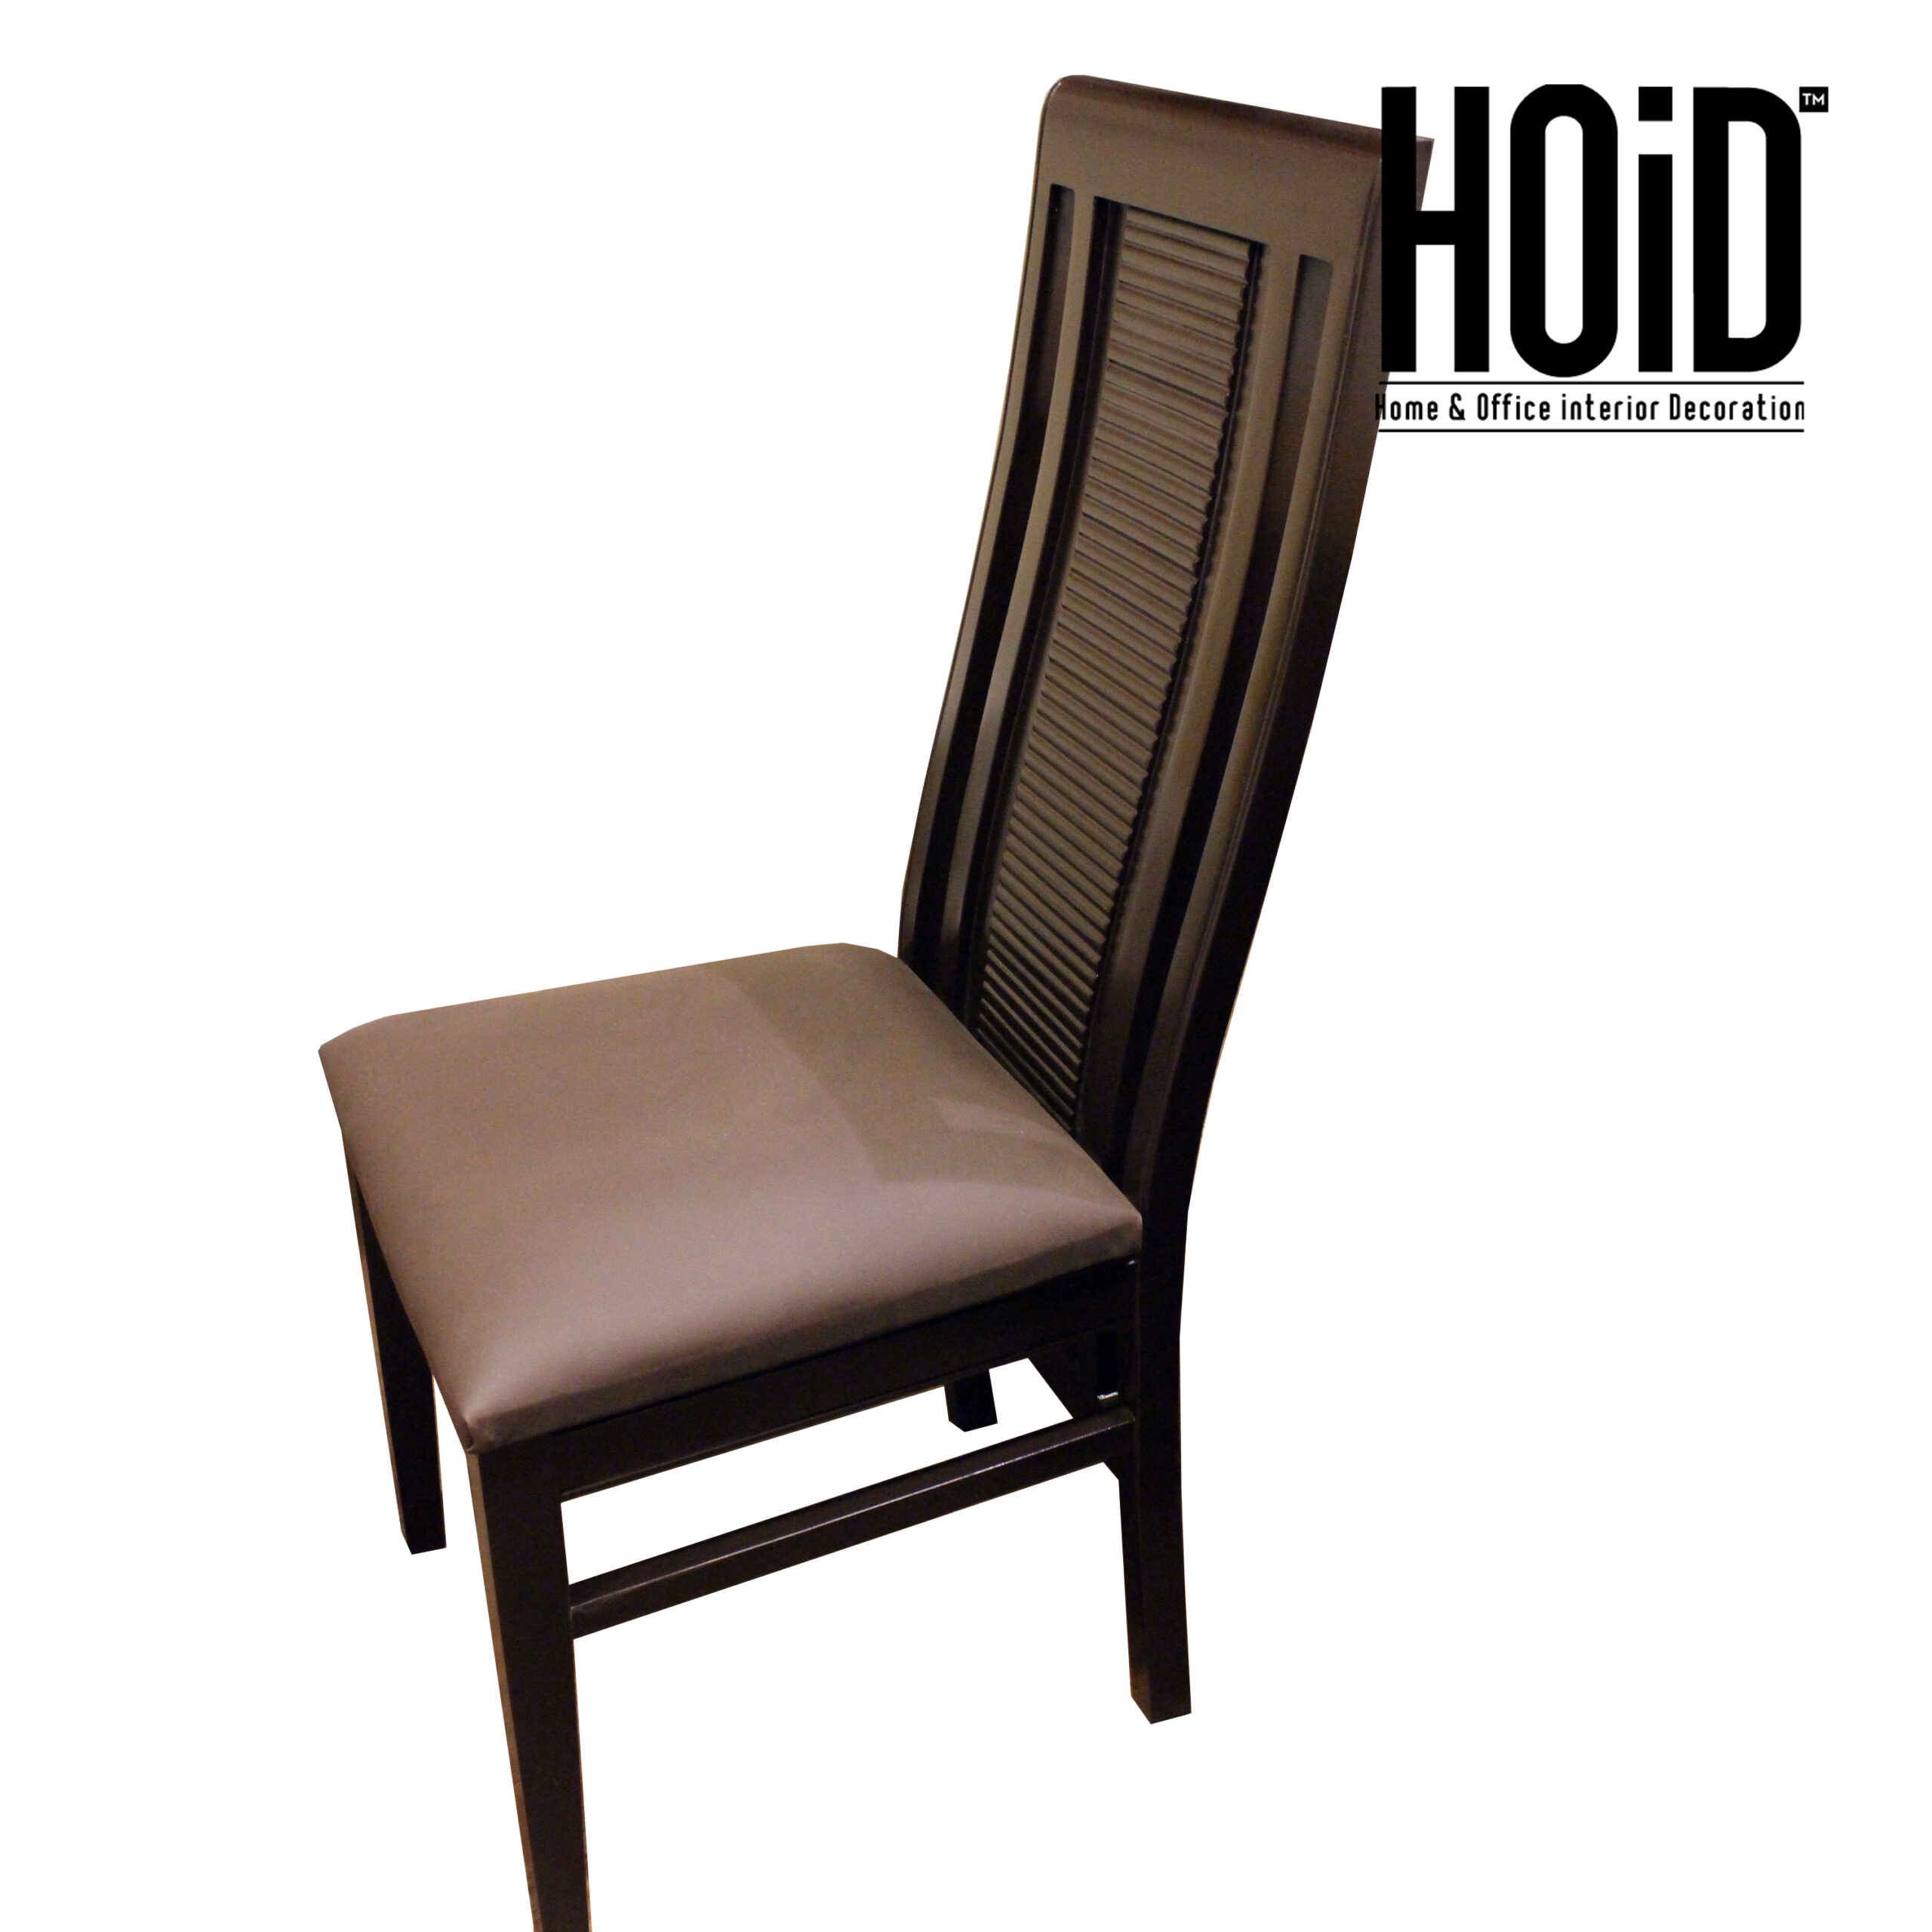 keppo-chair-scaled-2.jpg